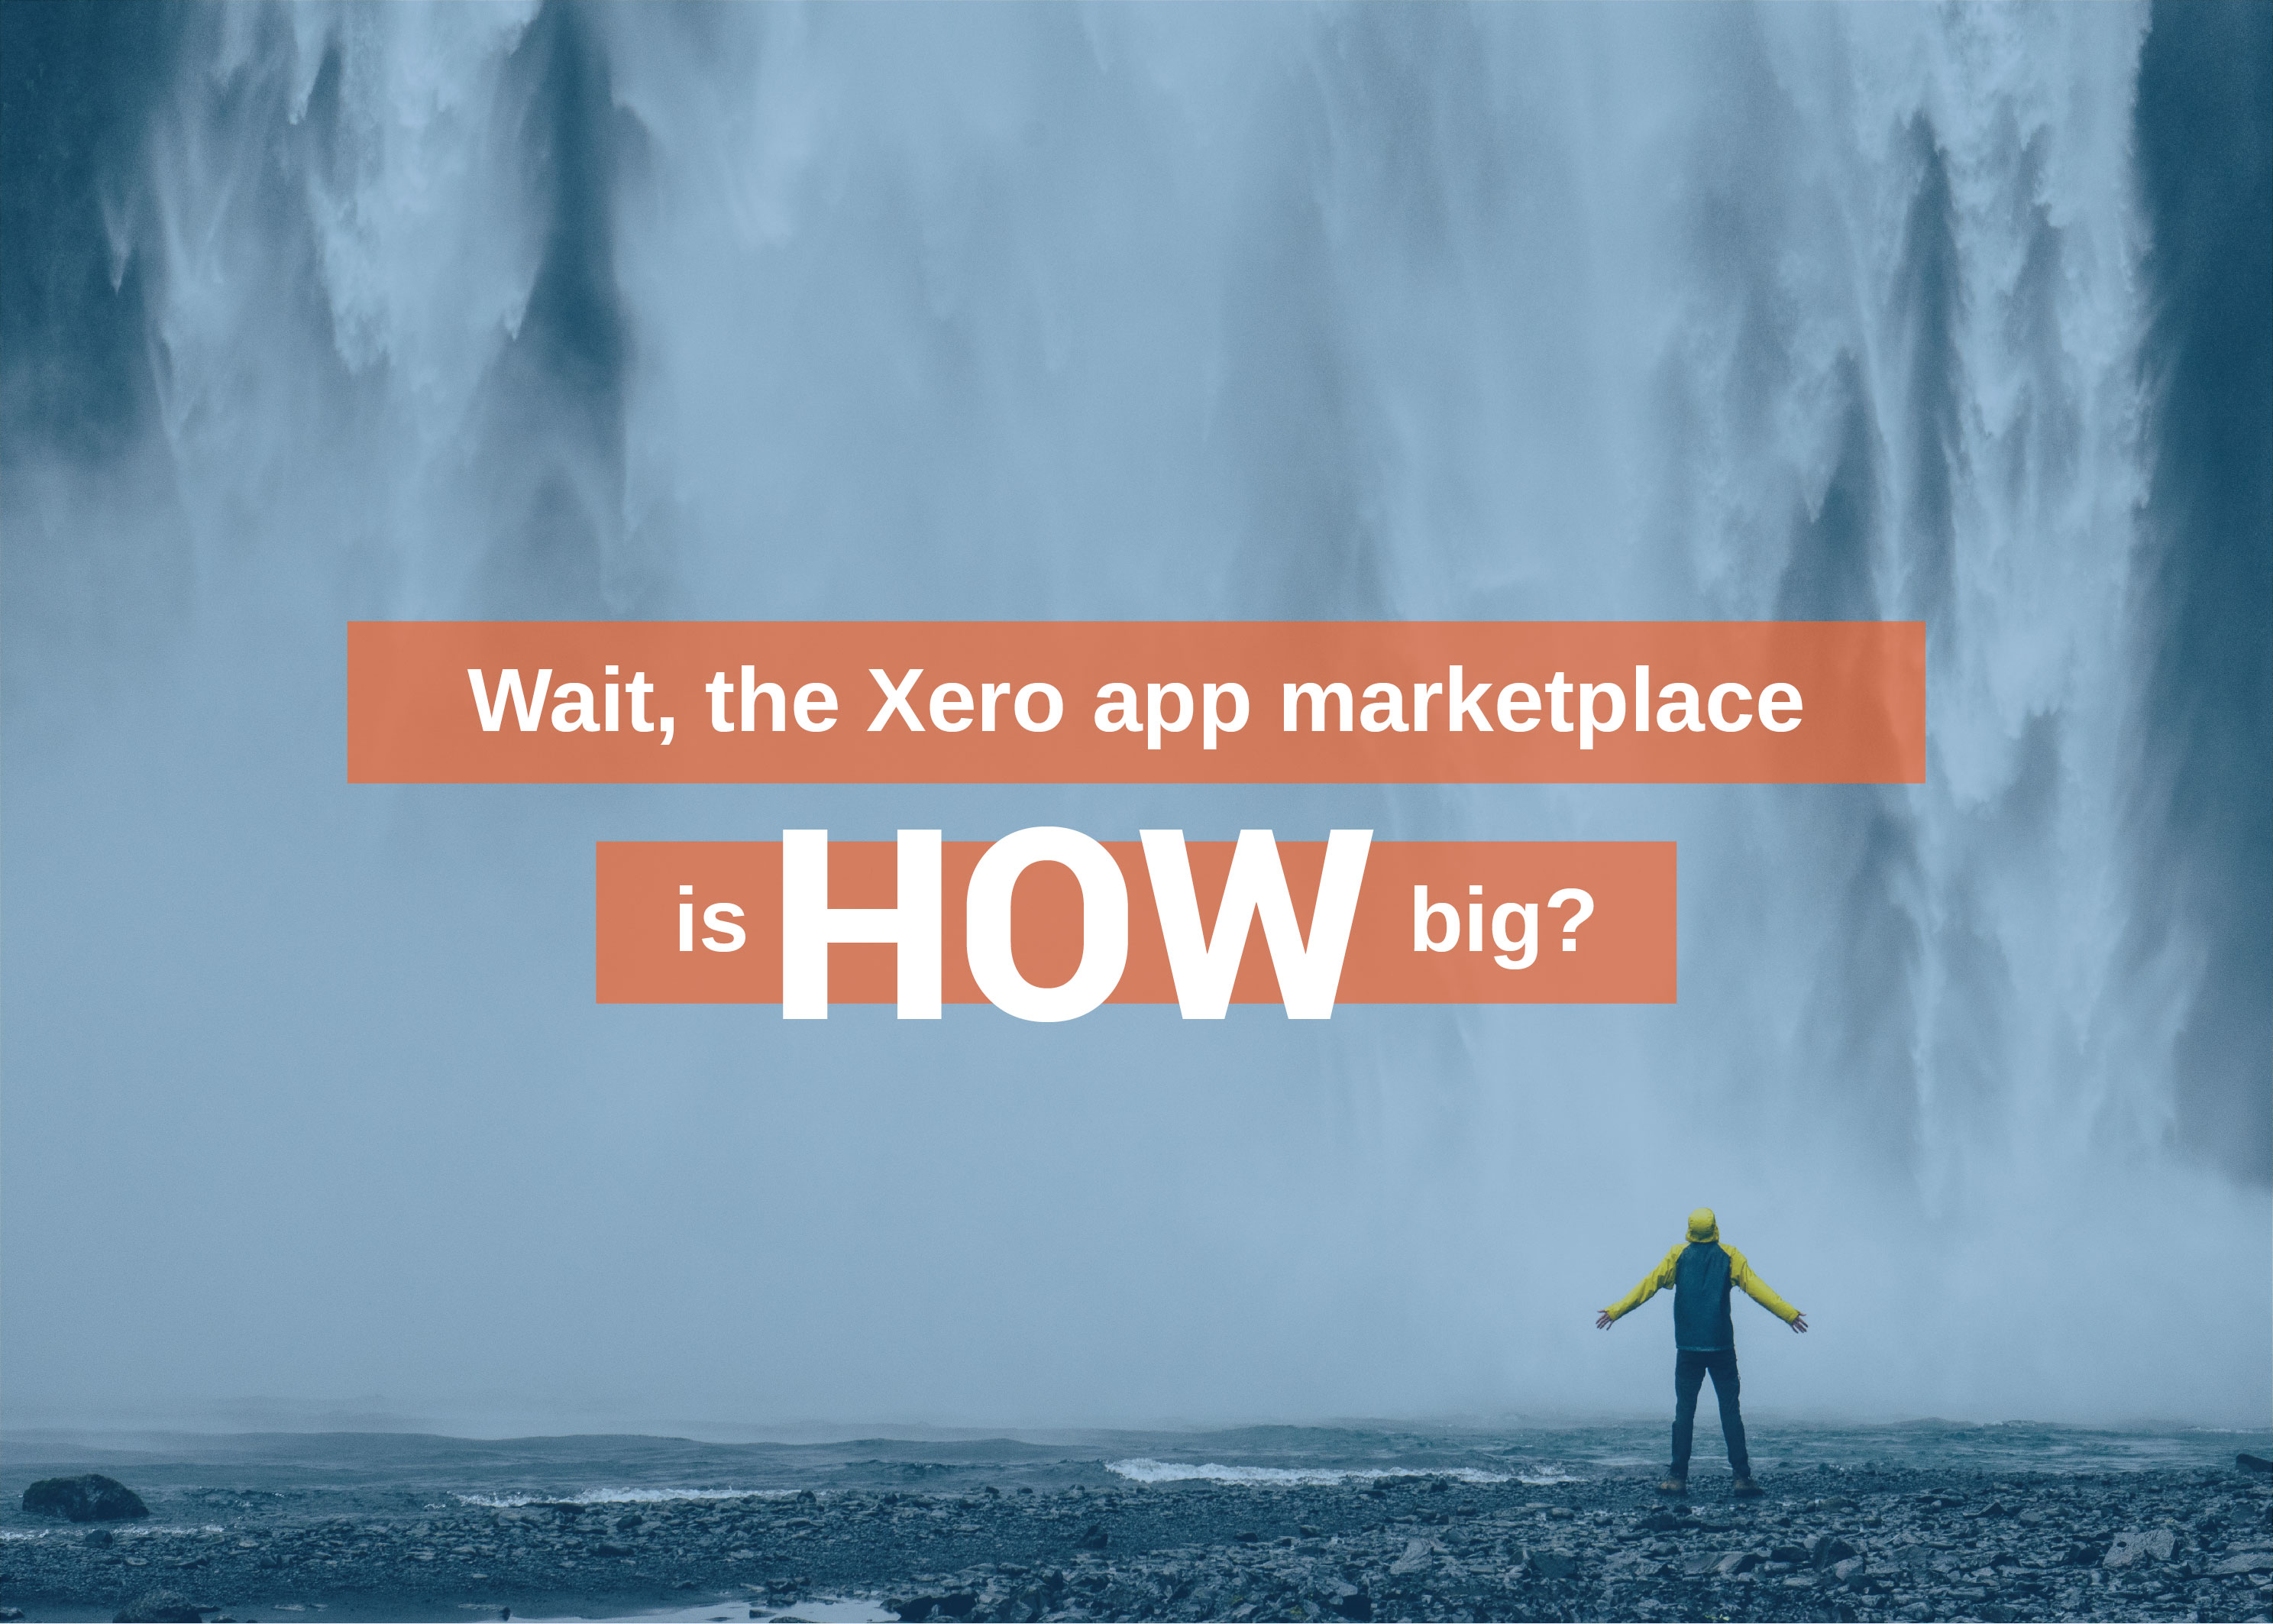 Wait, the Xero app marketplace is HOW big?